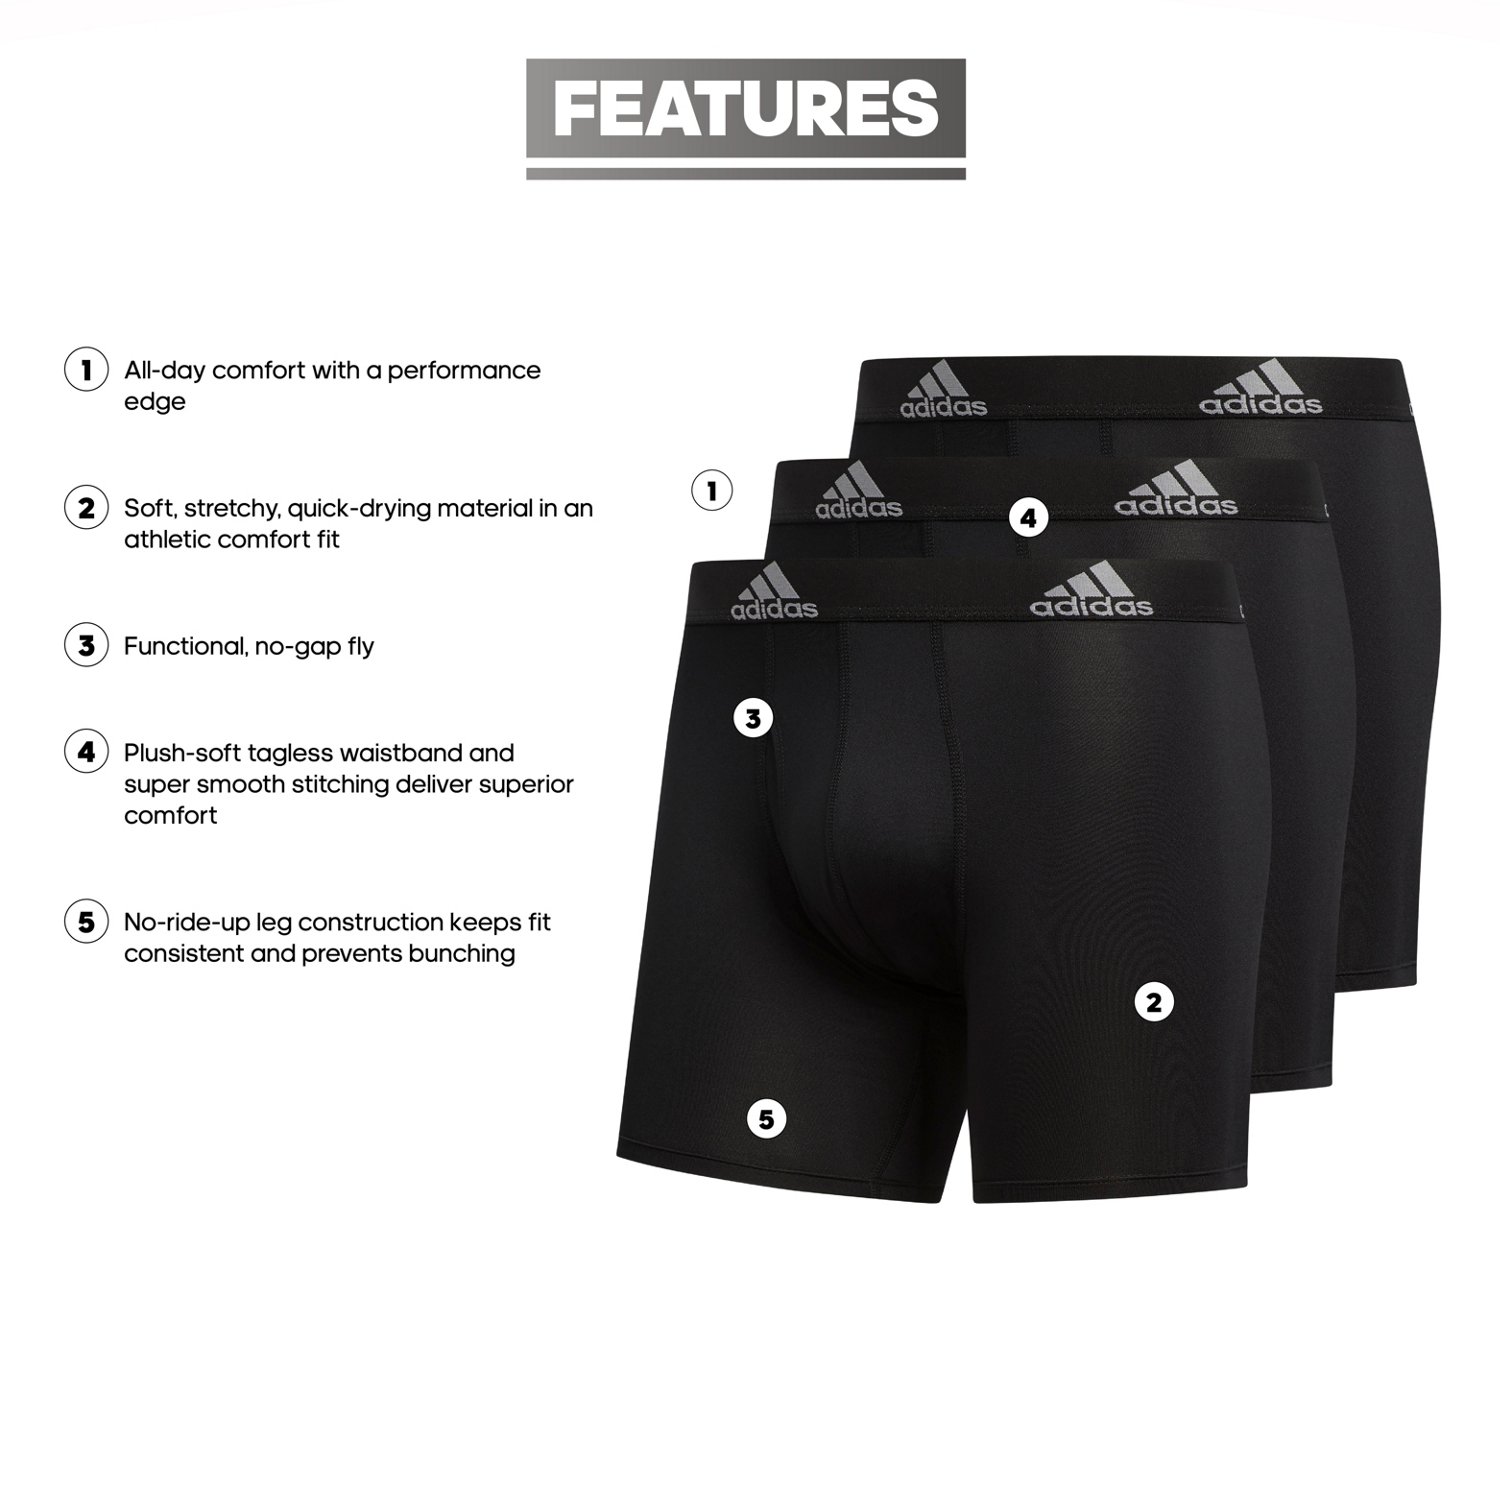 adidas Men's Performance Trunk Underwear (3-Pack), Black